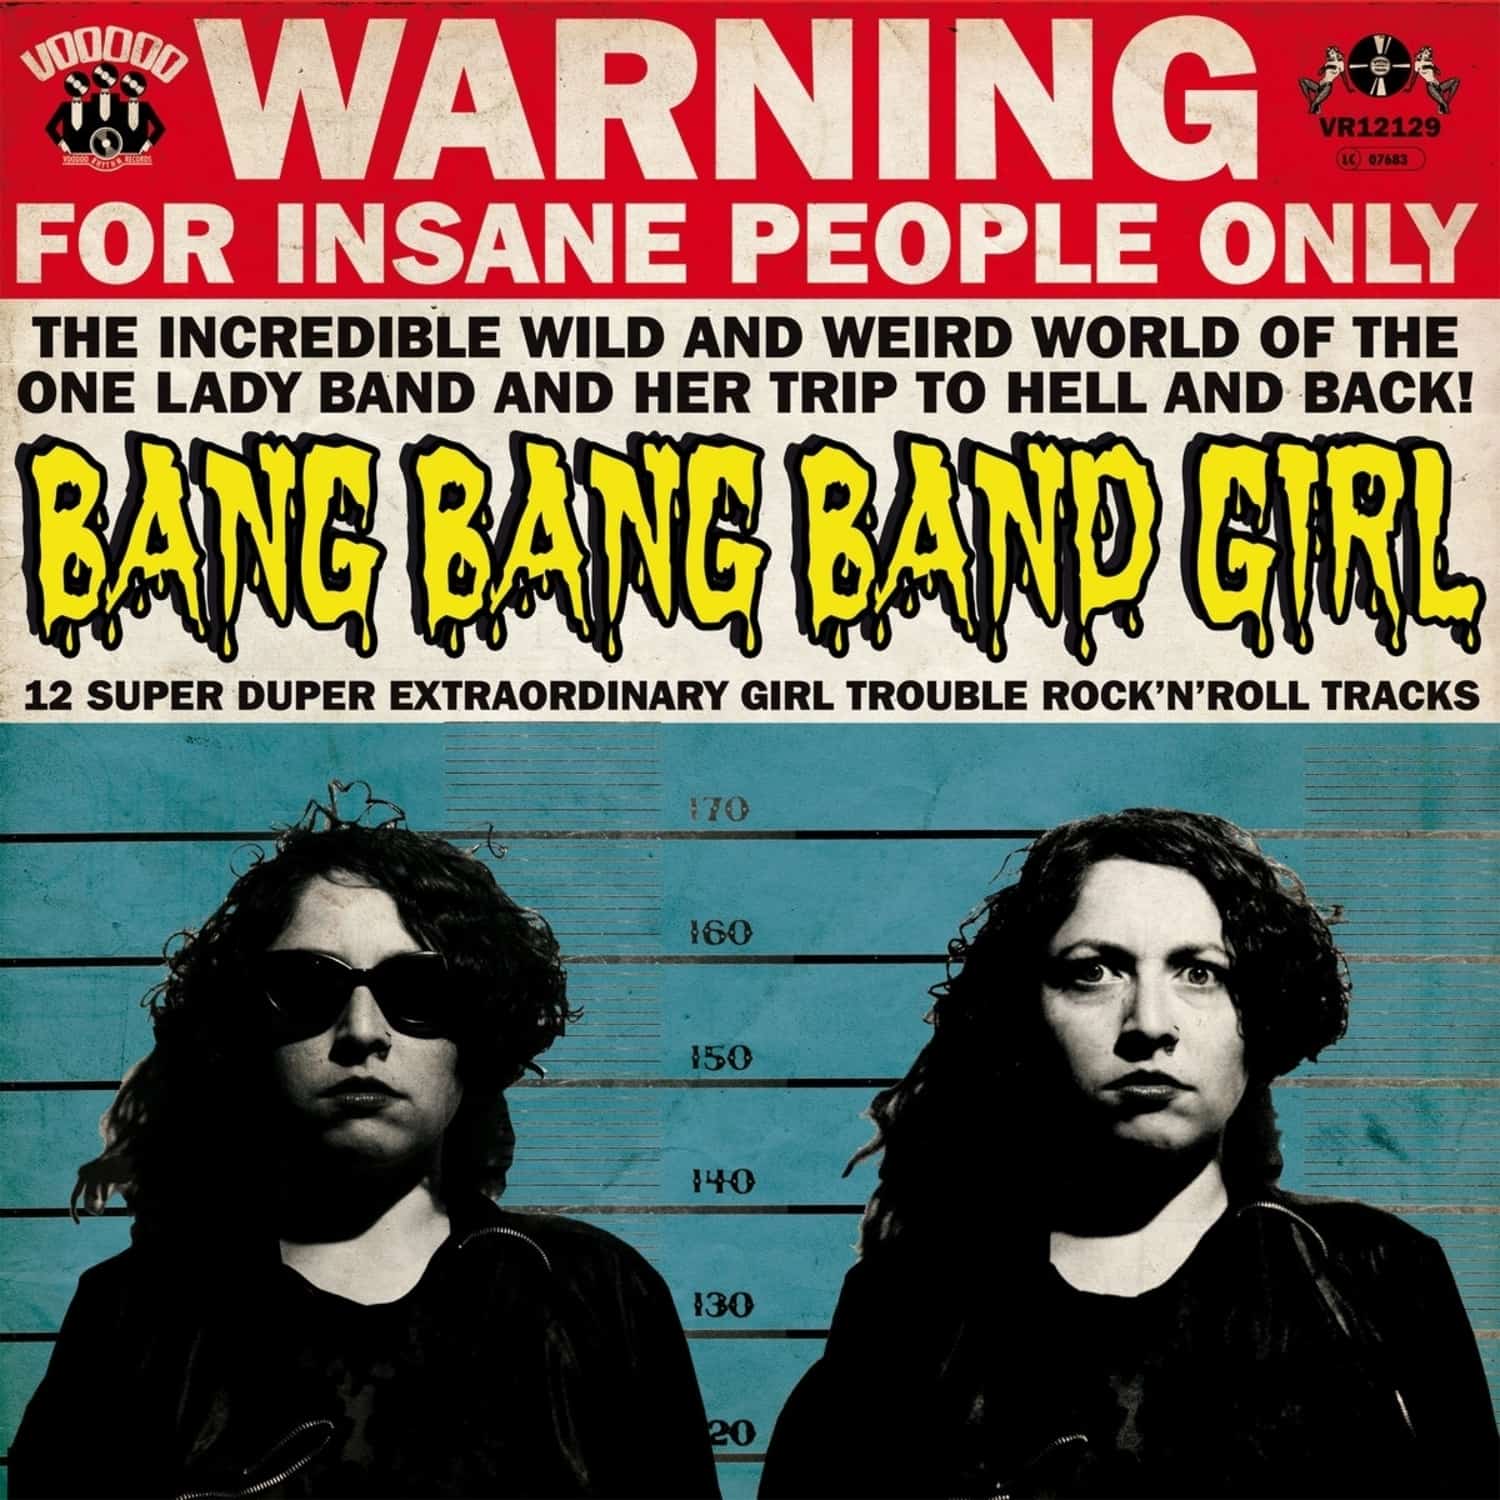 Bang Bang Band Girl - 12 SUPER DUPER EXTRAORDINARY GIRL TROUBLE ROCK N R 